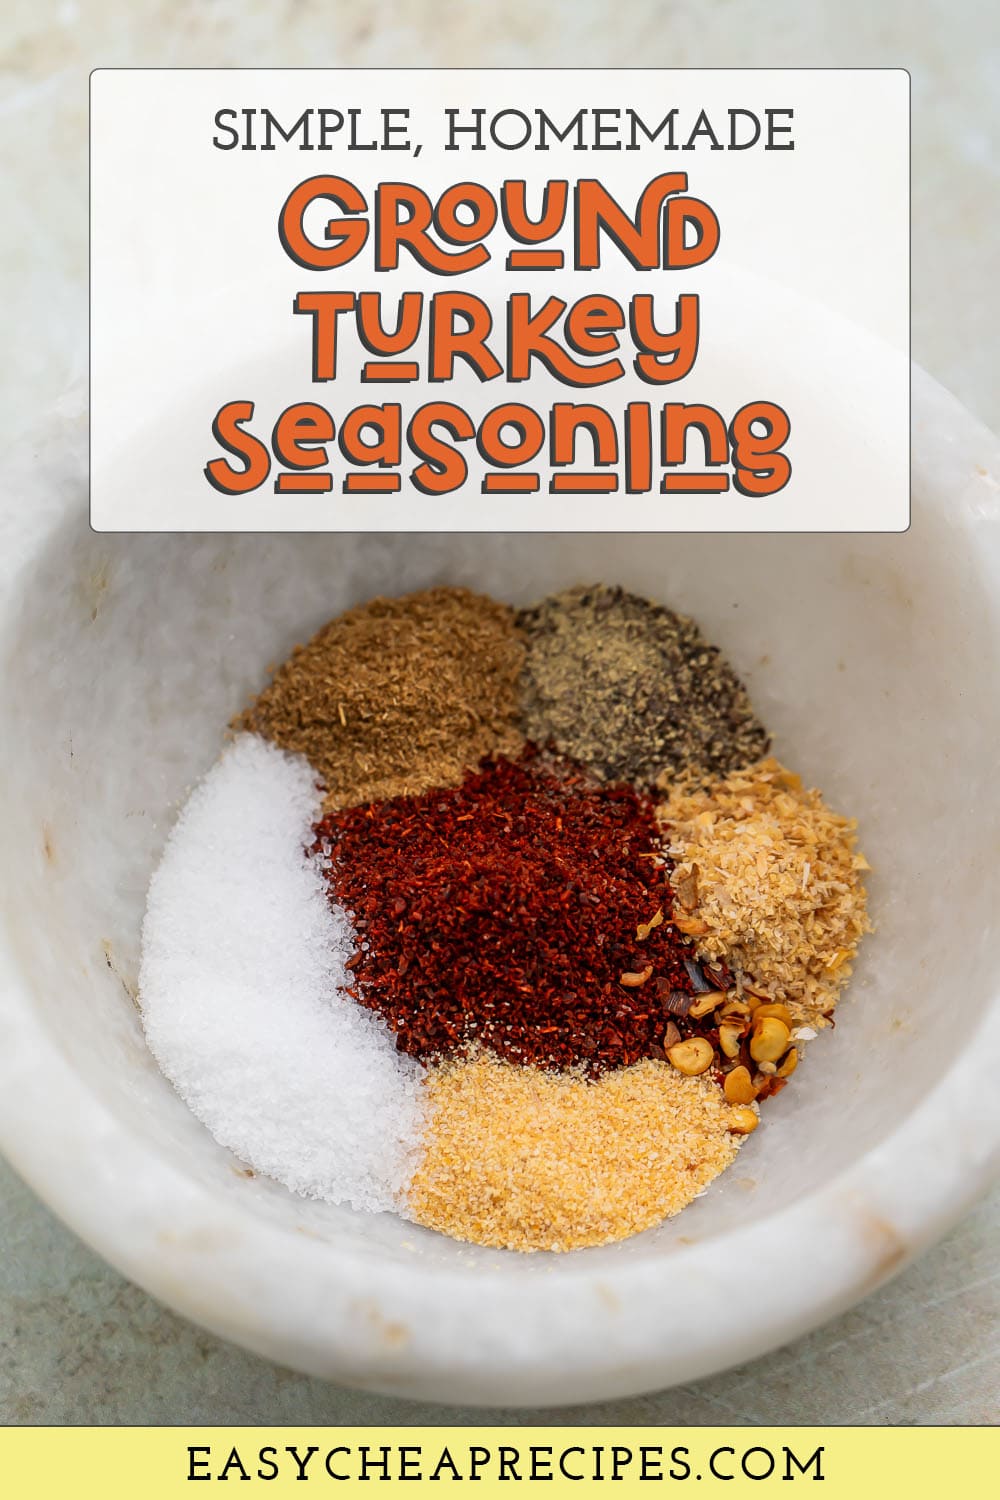 Pin graphic for ground turkey seasoning.